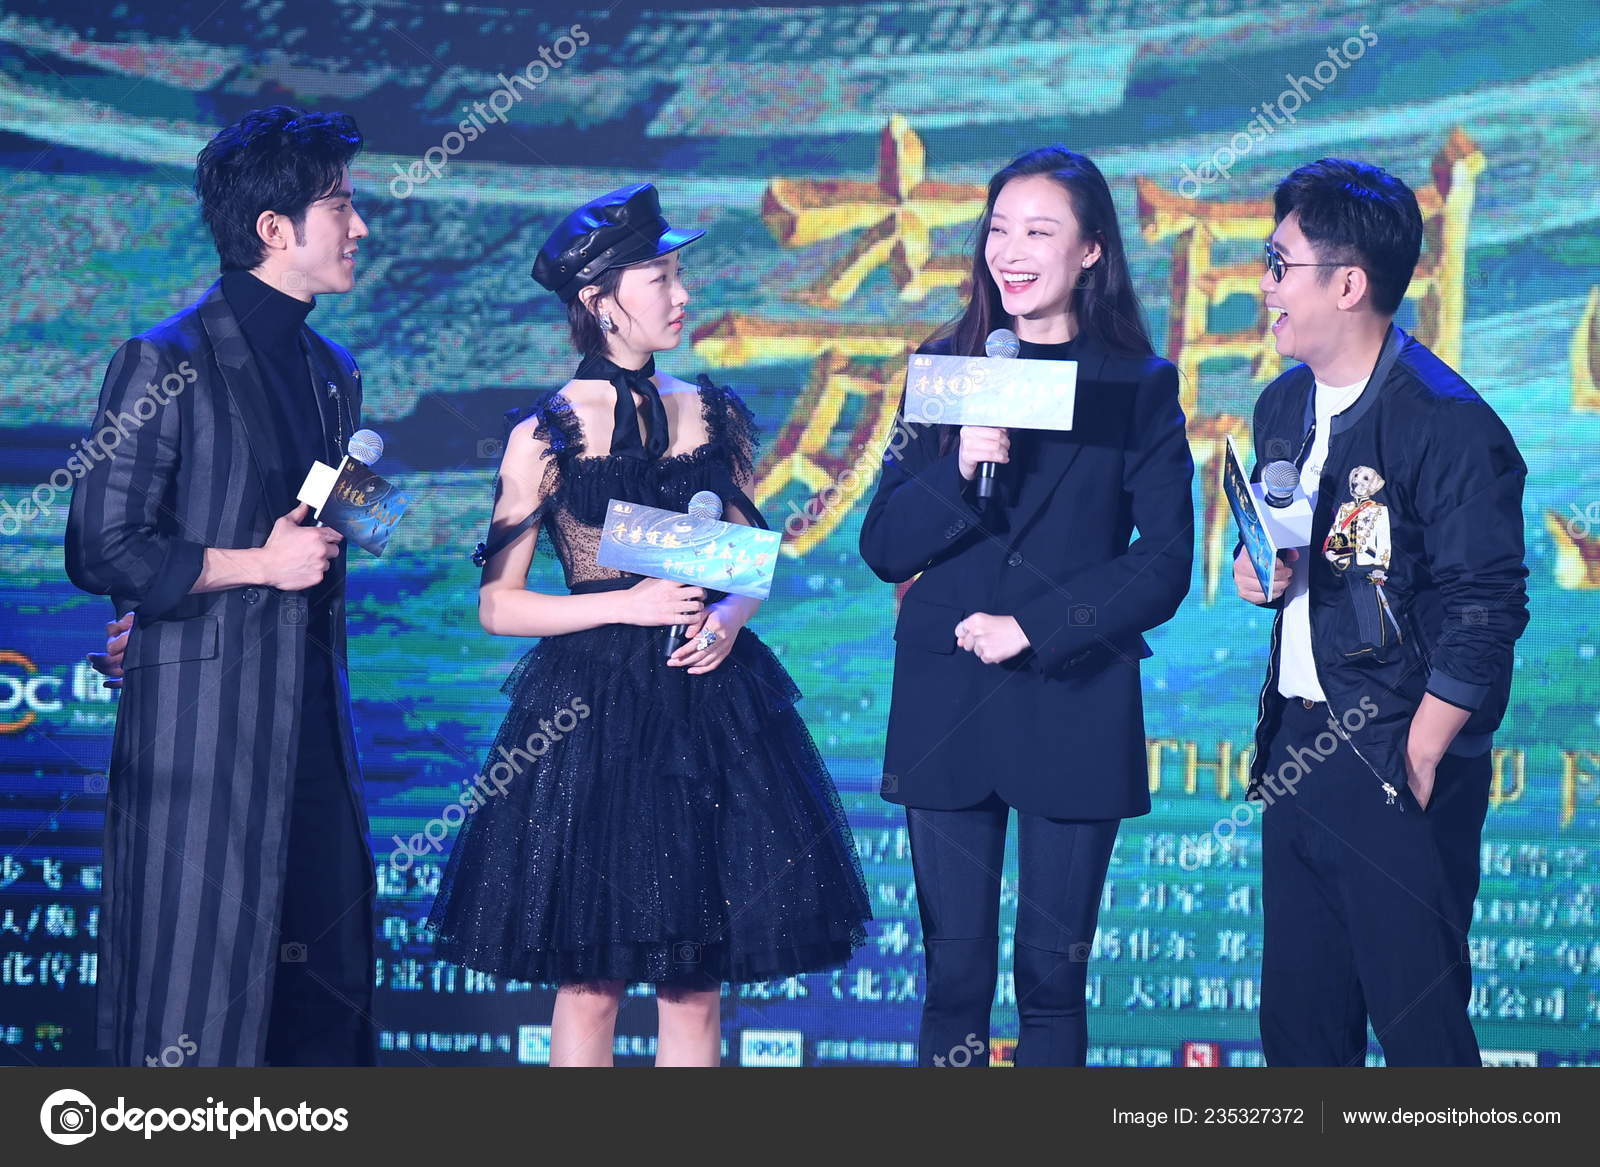 Chinese actress Zhou Dongyu promotes her film in Hangzhou City